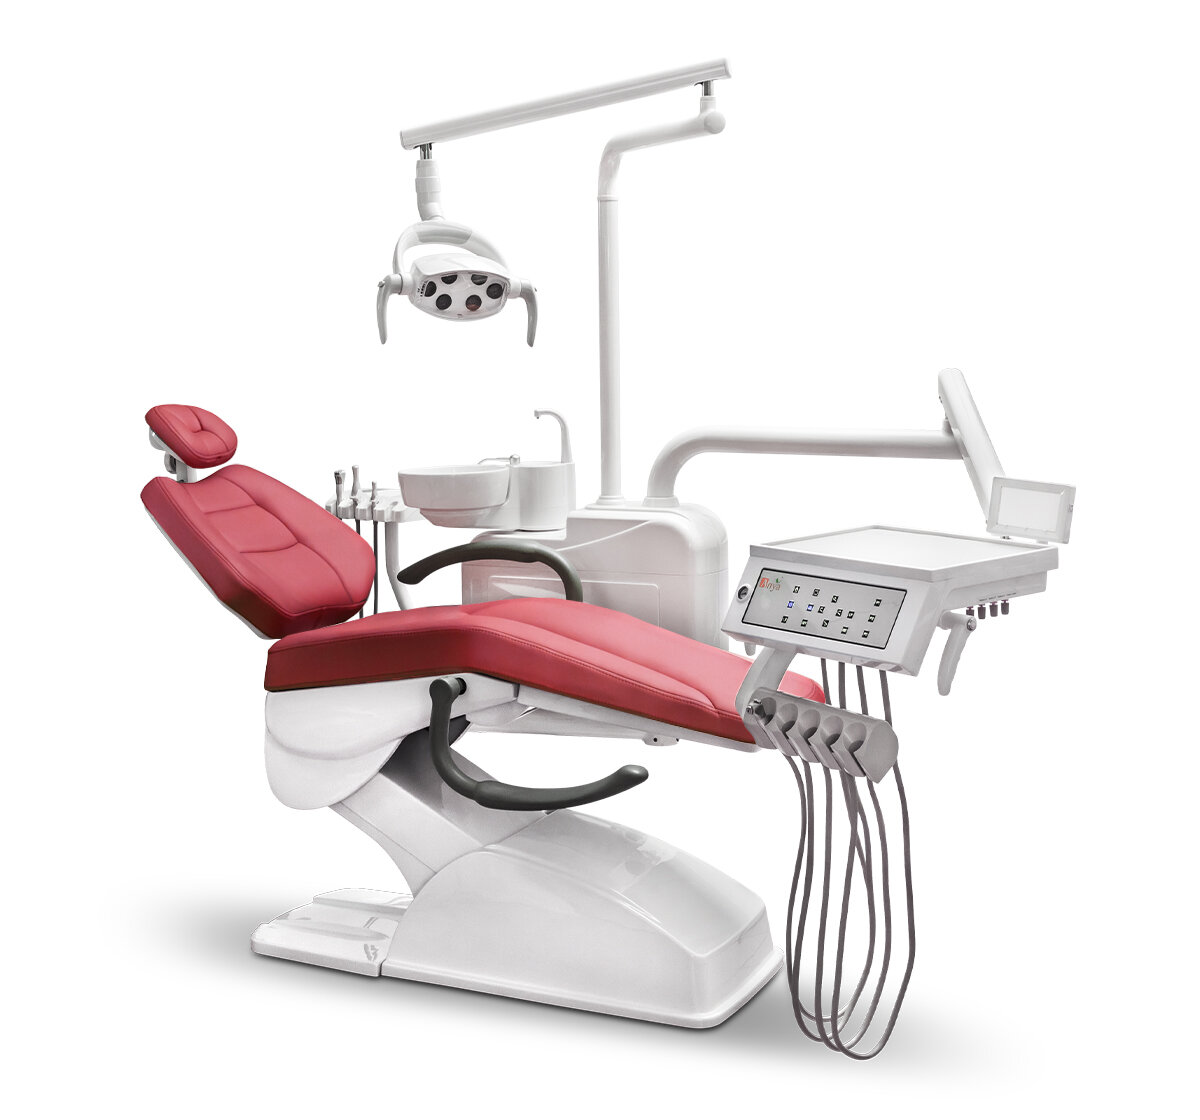 Dentistry and orthodontics